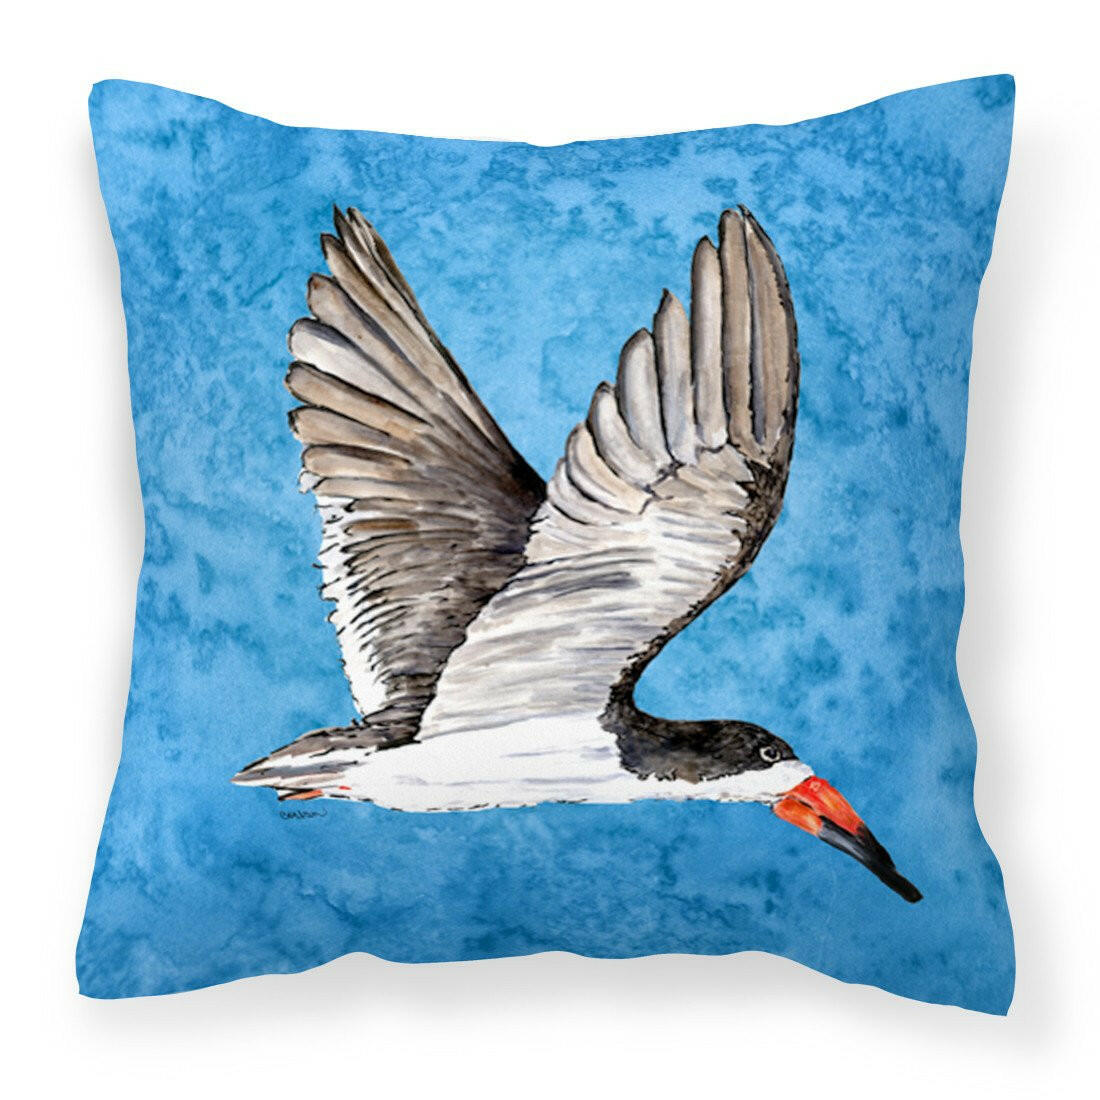 Bird on Blue Fabric Decorative Pillow 8692PW1414 - the-store.com